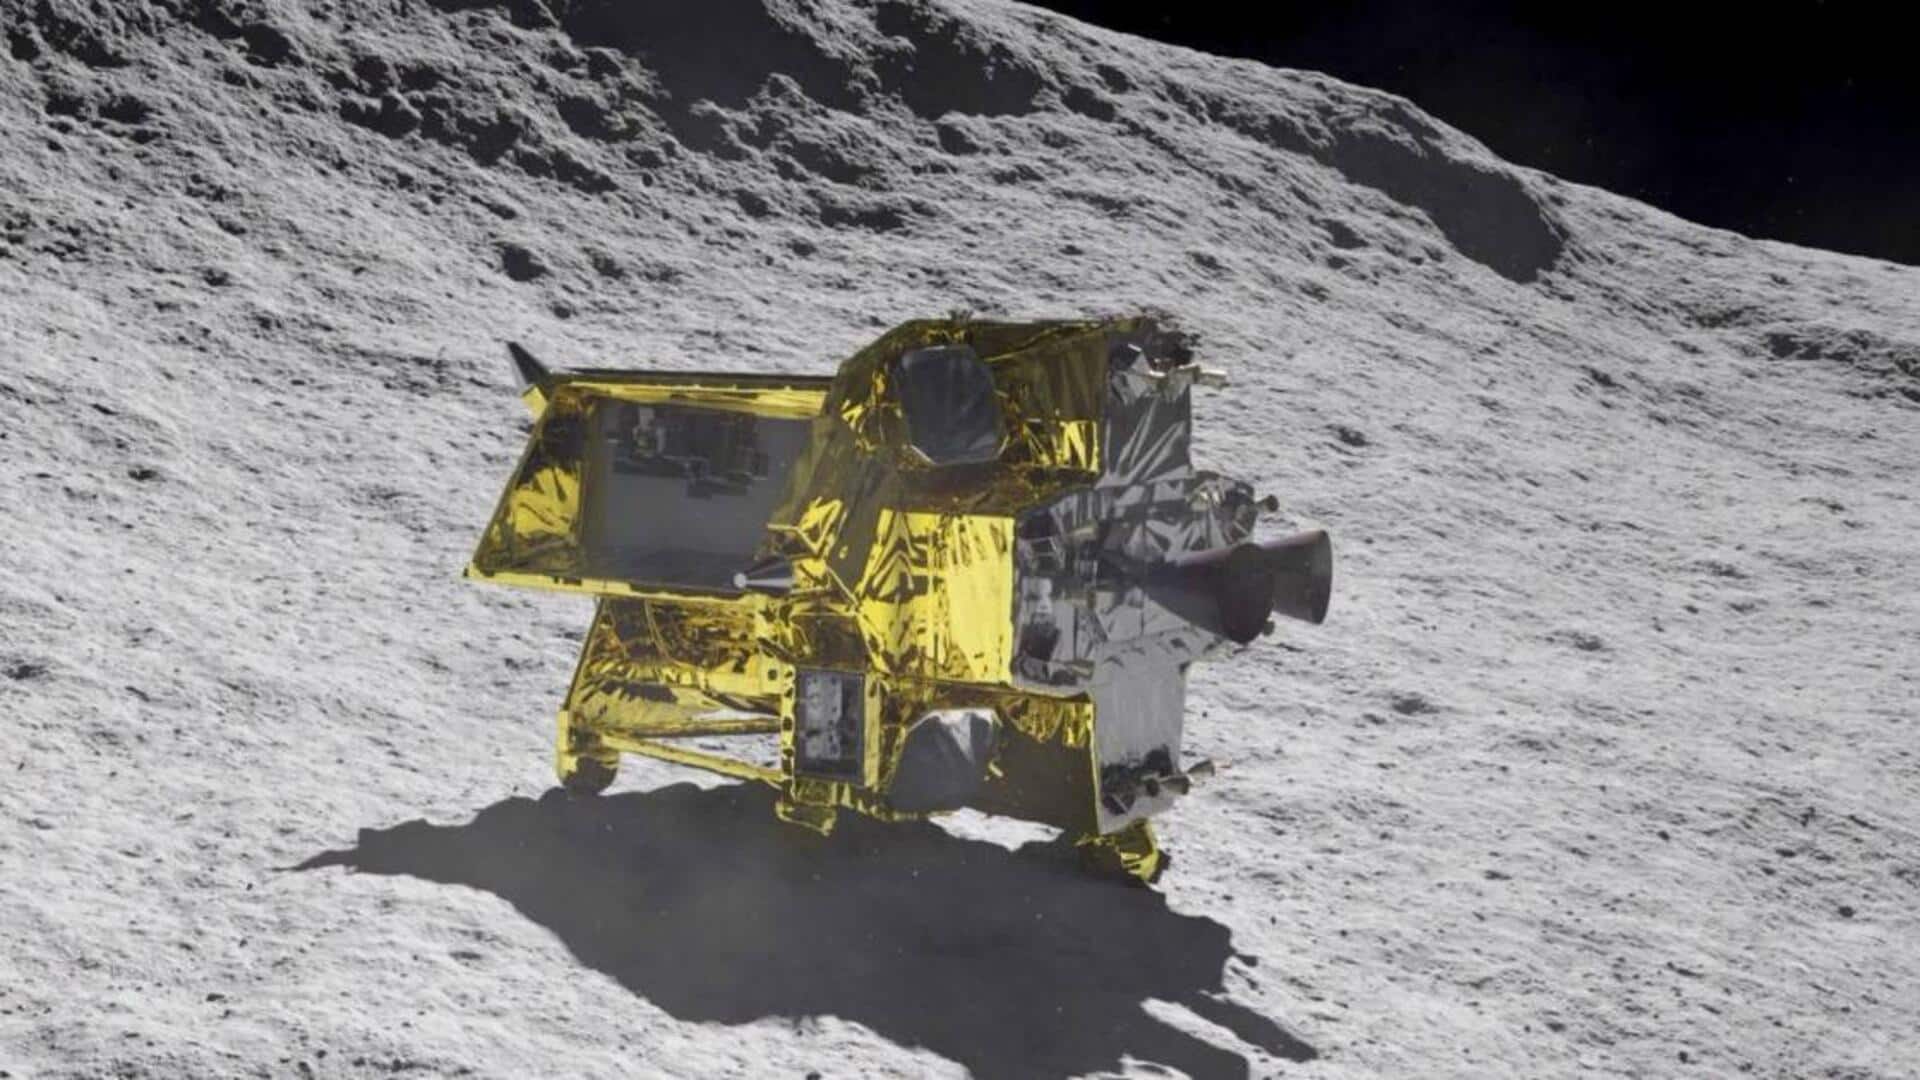 Japan's SLIM lunar craft successful in sending data to Earth